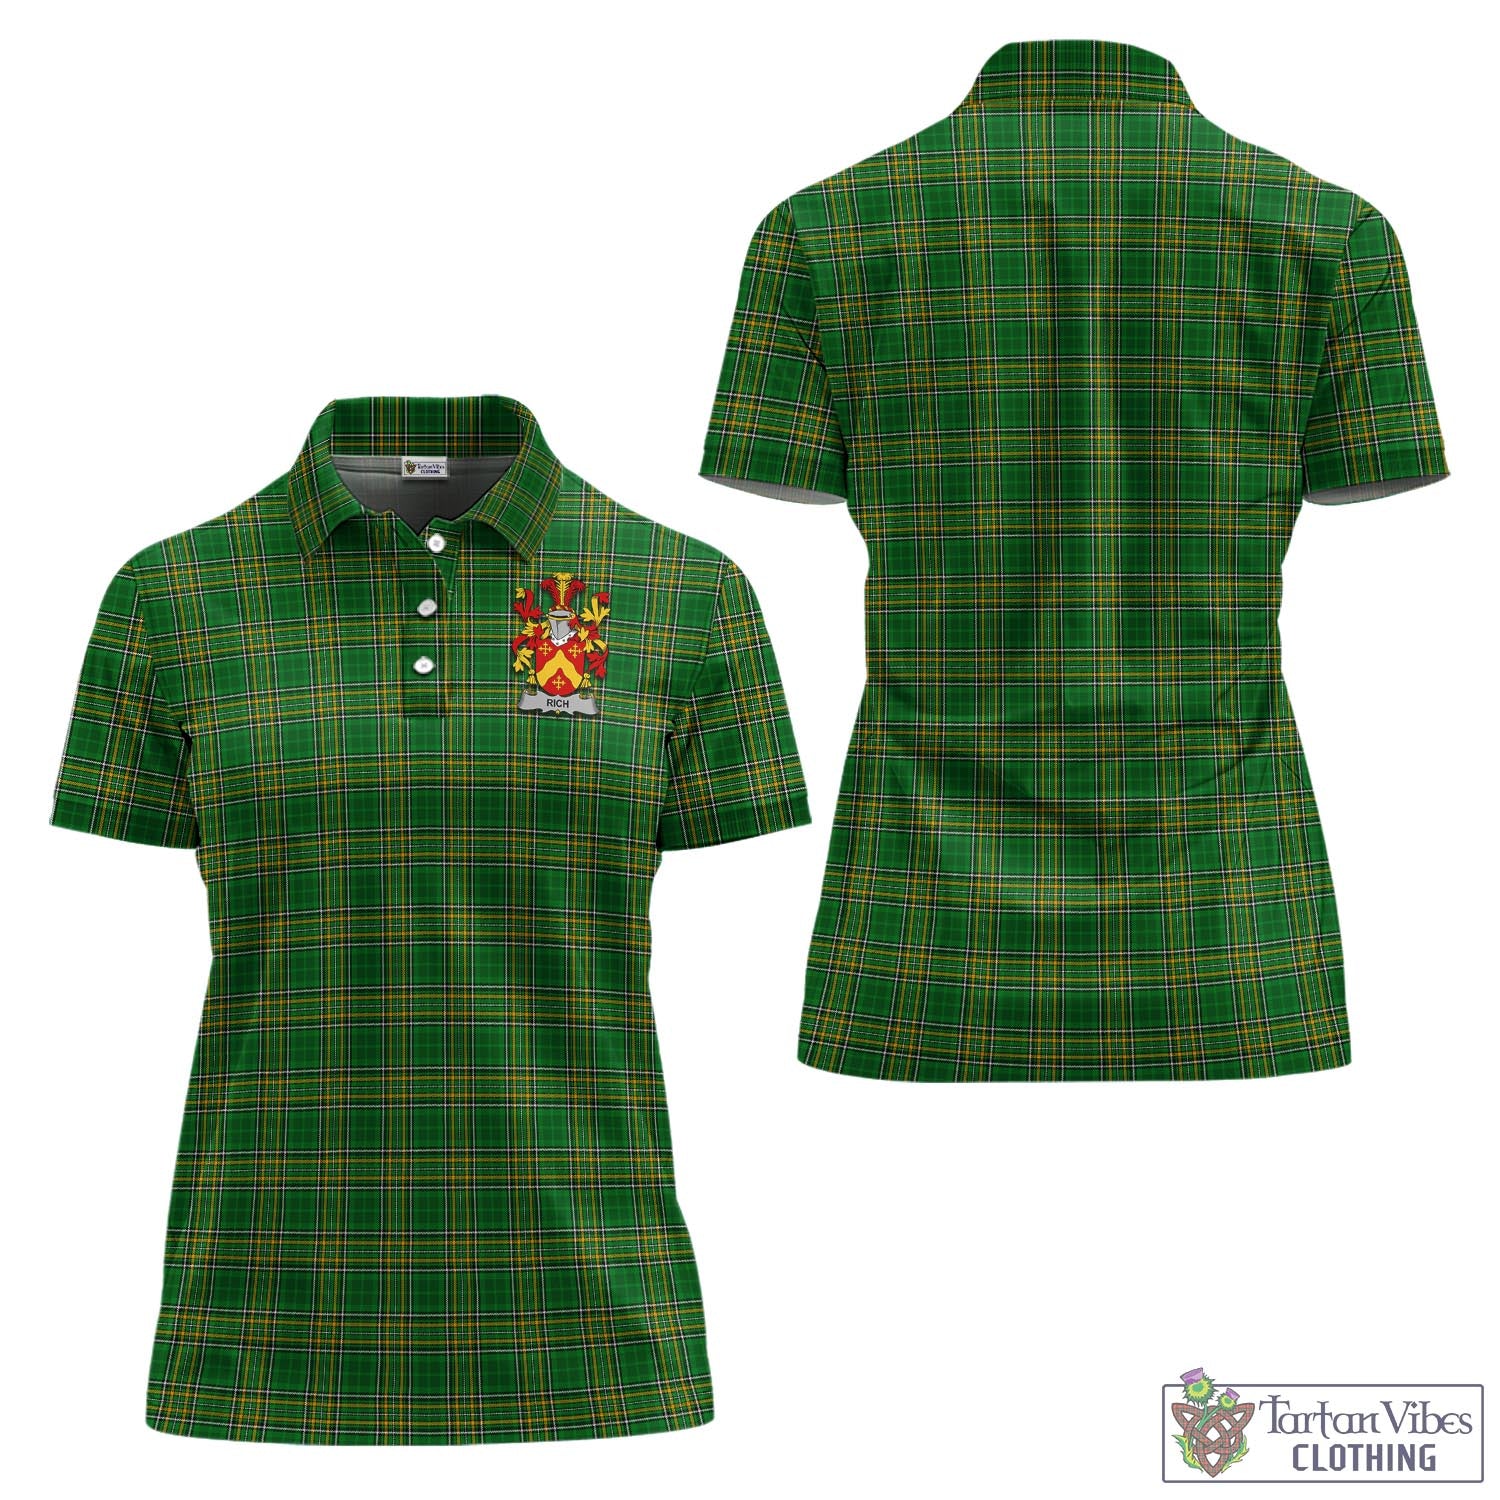 Tartan Vibes Clothing Rich Ireland Clan Tartan Women's Polo Shirt with Coat of Arms